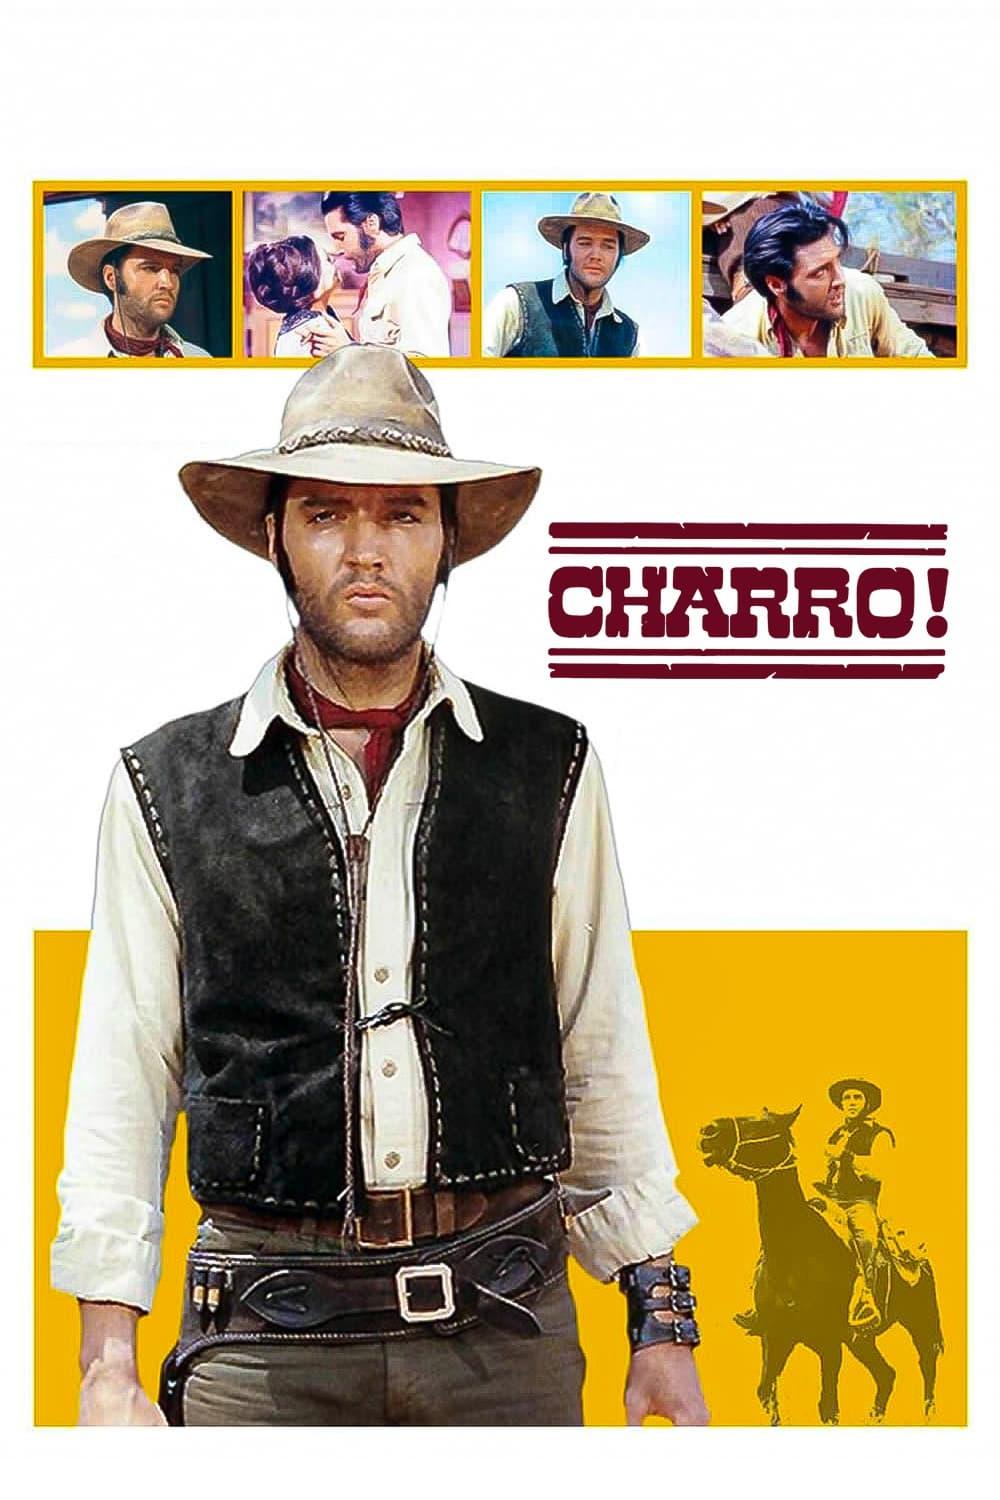 Charro! poster